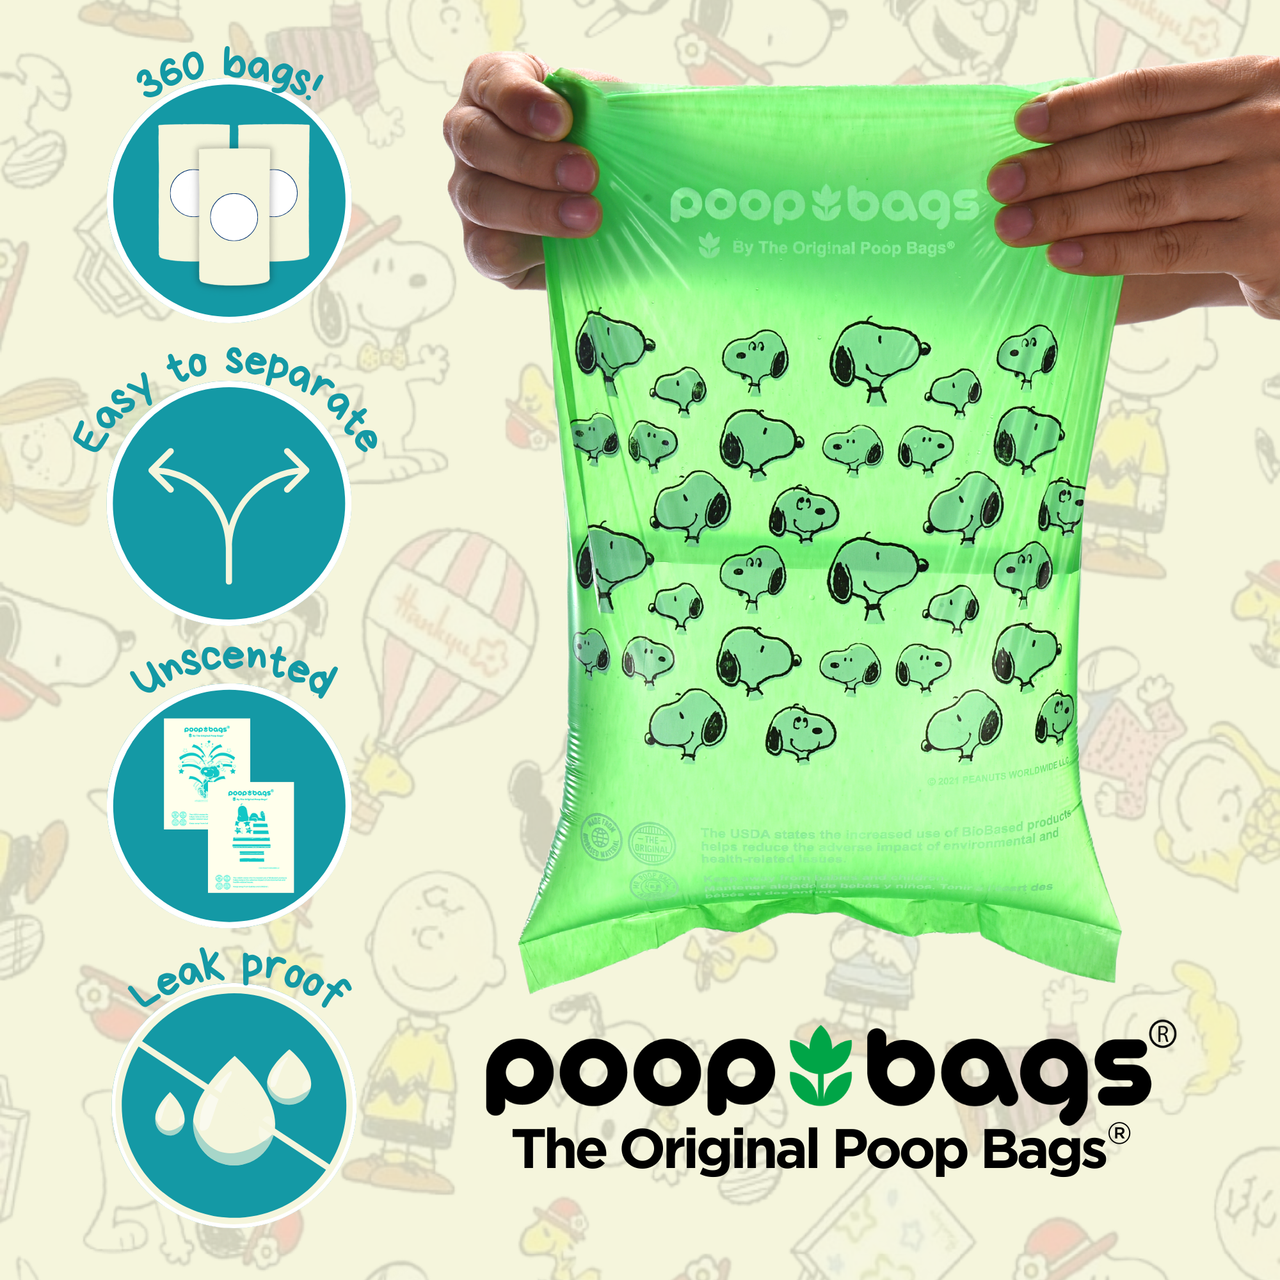 360 Unscented Poop Bags in Leash Rolls (360PBPN351)